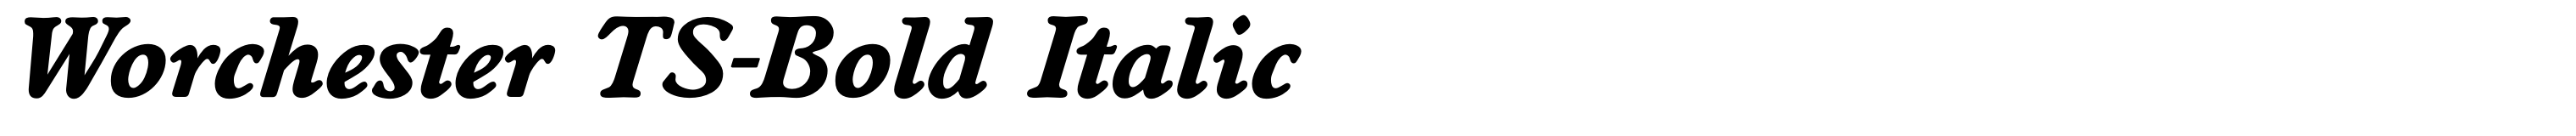 Worchester TS-Bold Italic